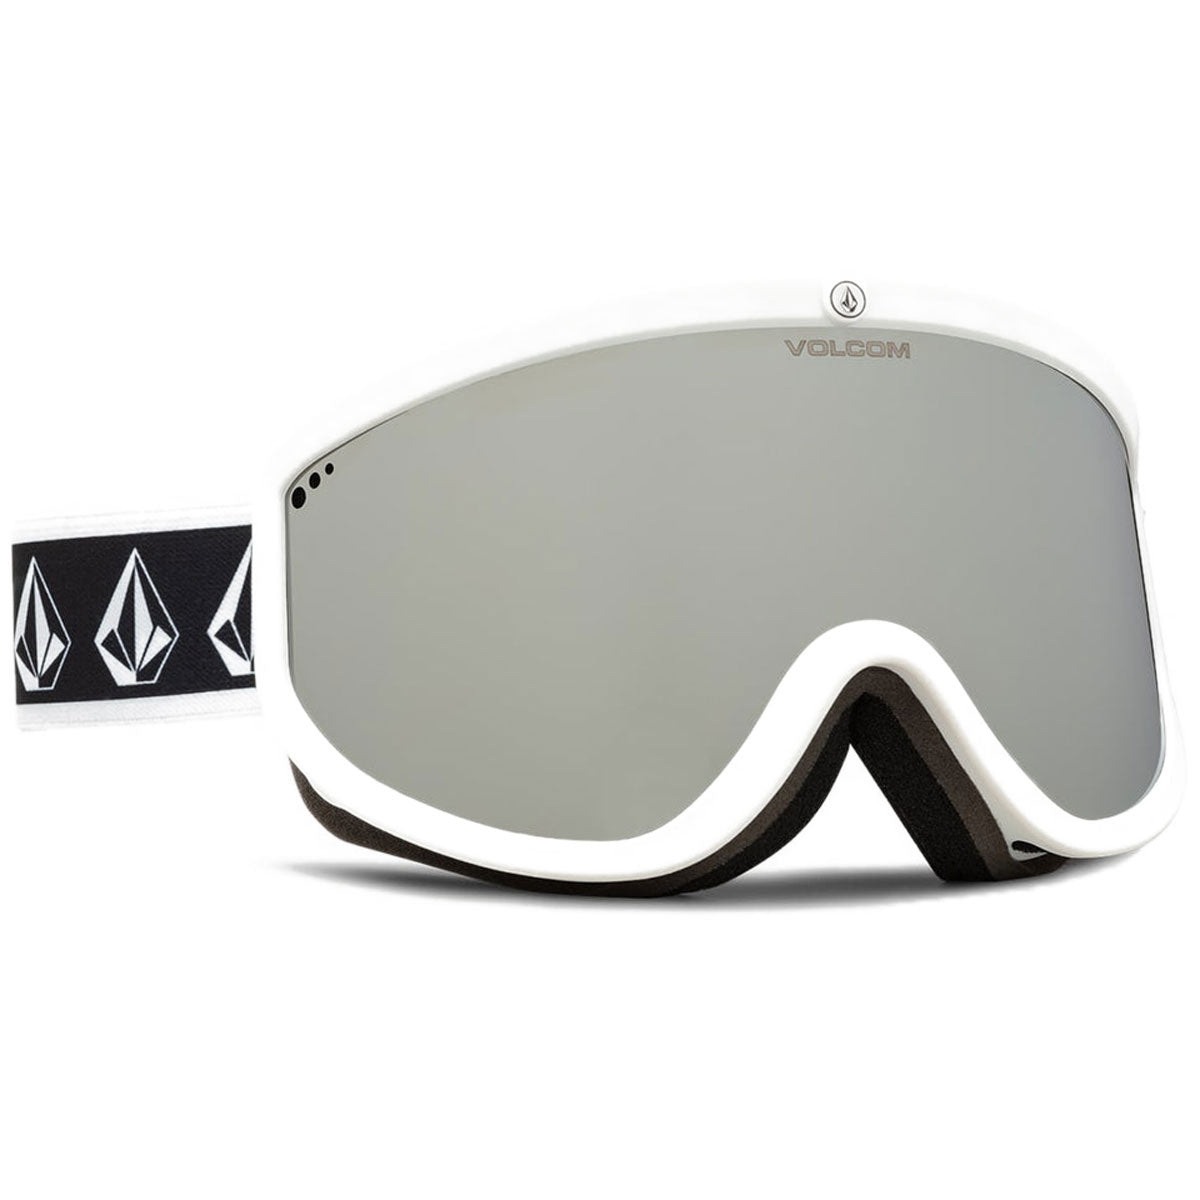 Volcom Footprints Snowboard Goggles - White Rerun/Silver Chrome image 3